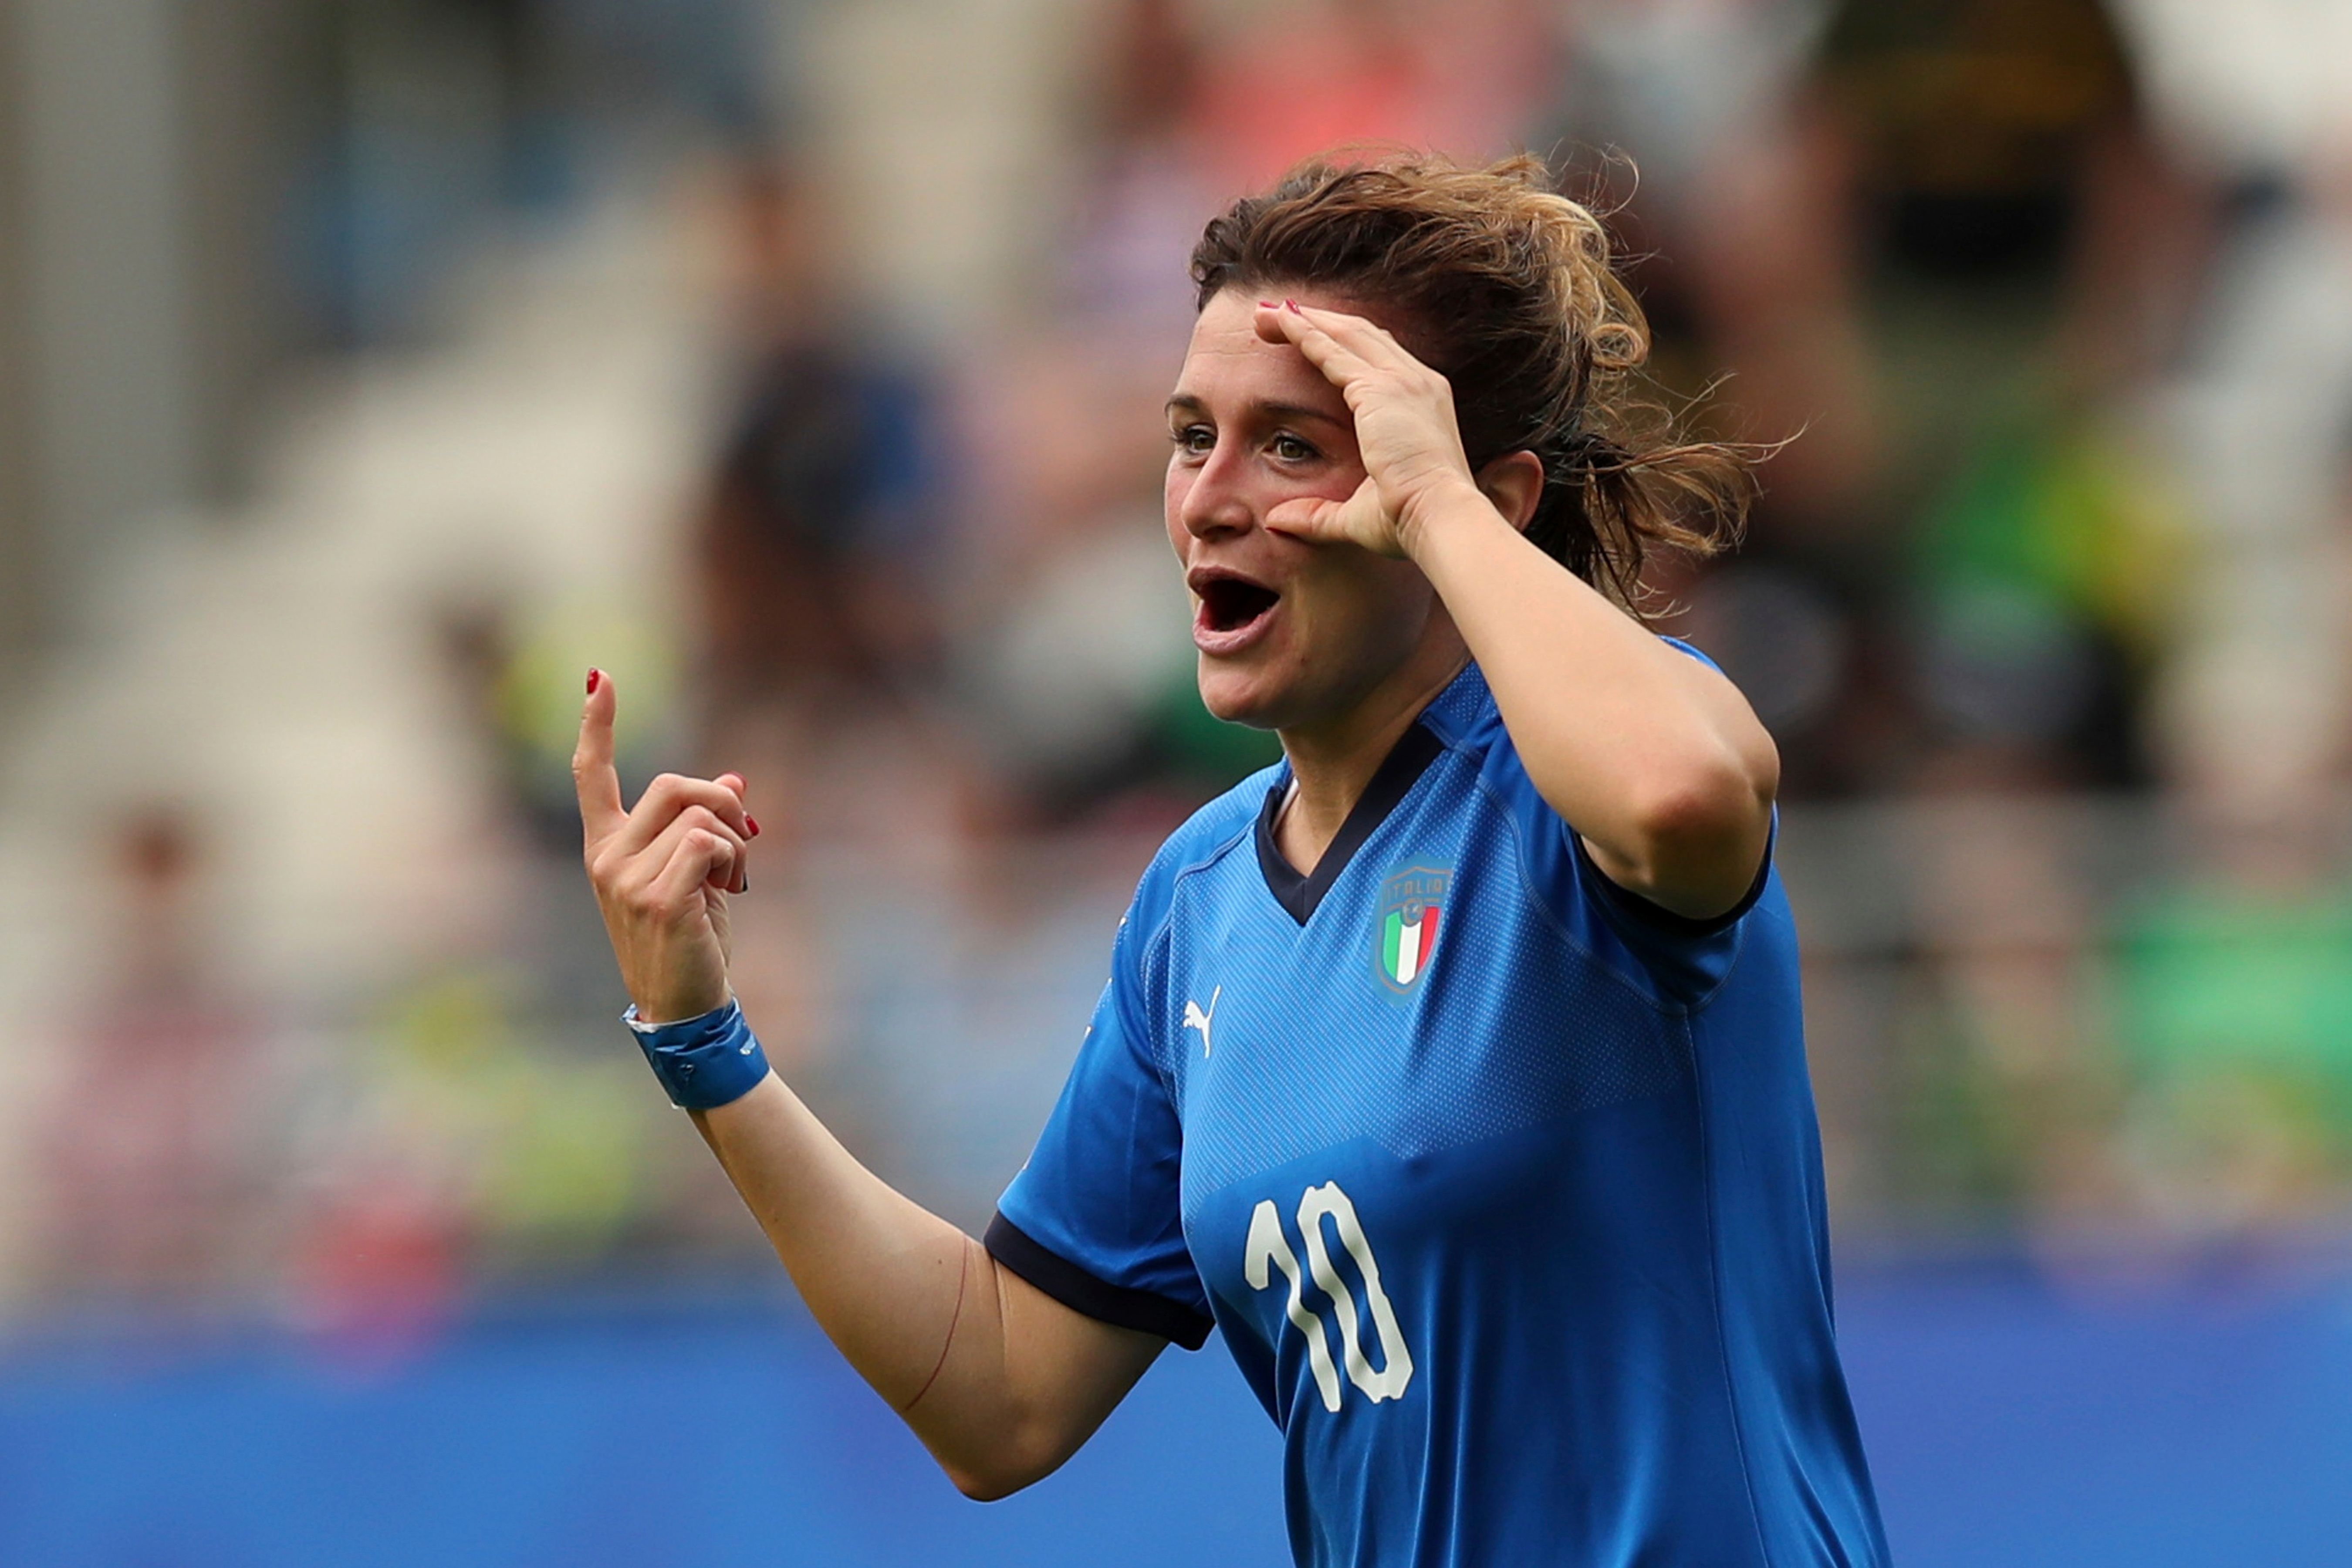 Italy's top goal scorers' jerseys